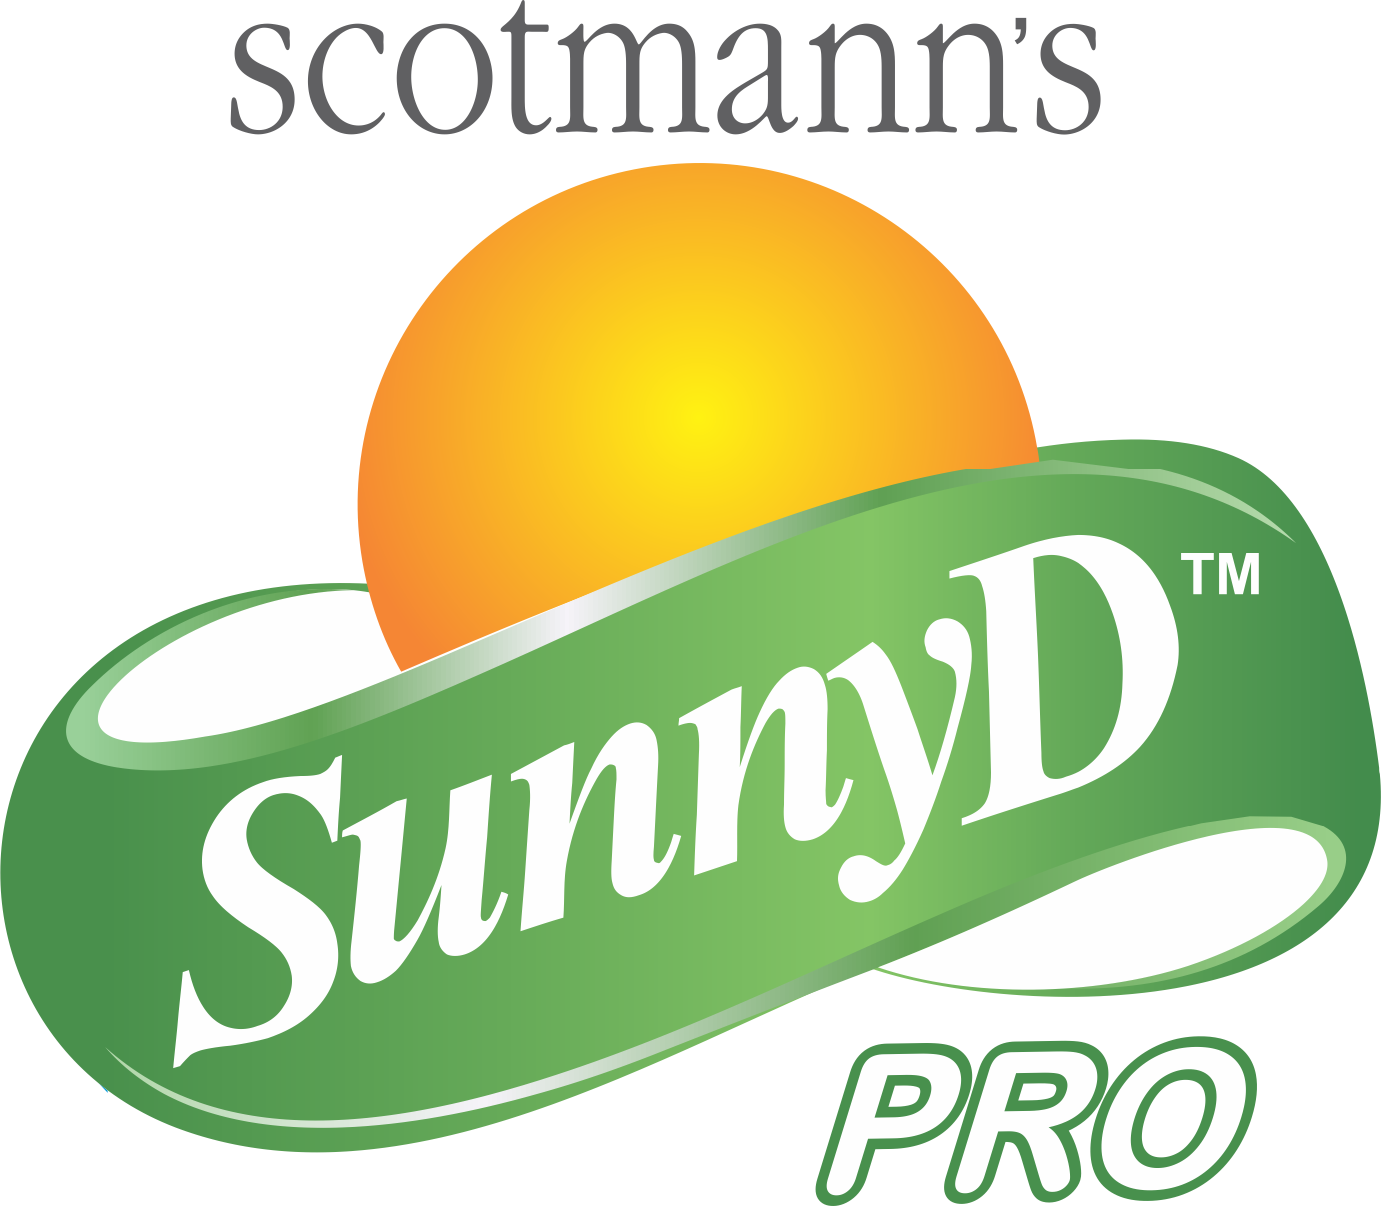 Sunny D PRO | MK-7 + Vitamin D3 | Vitamin & Vitamin Analogues | Scotmann